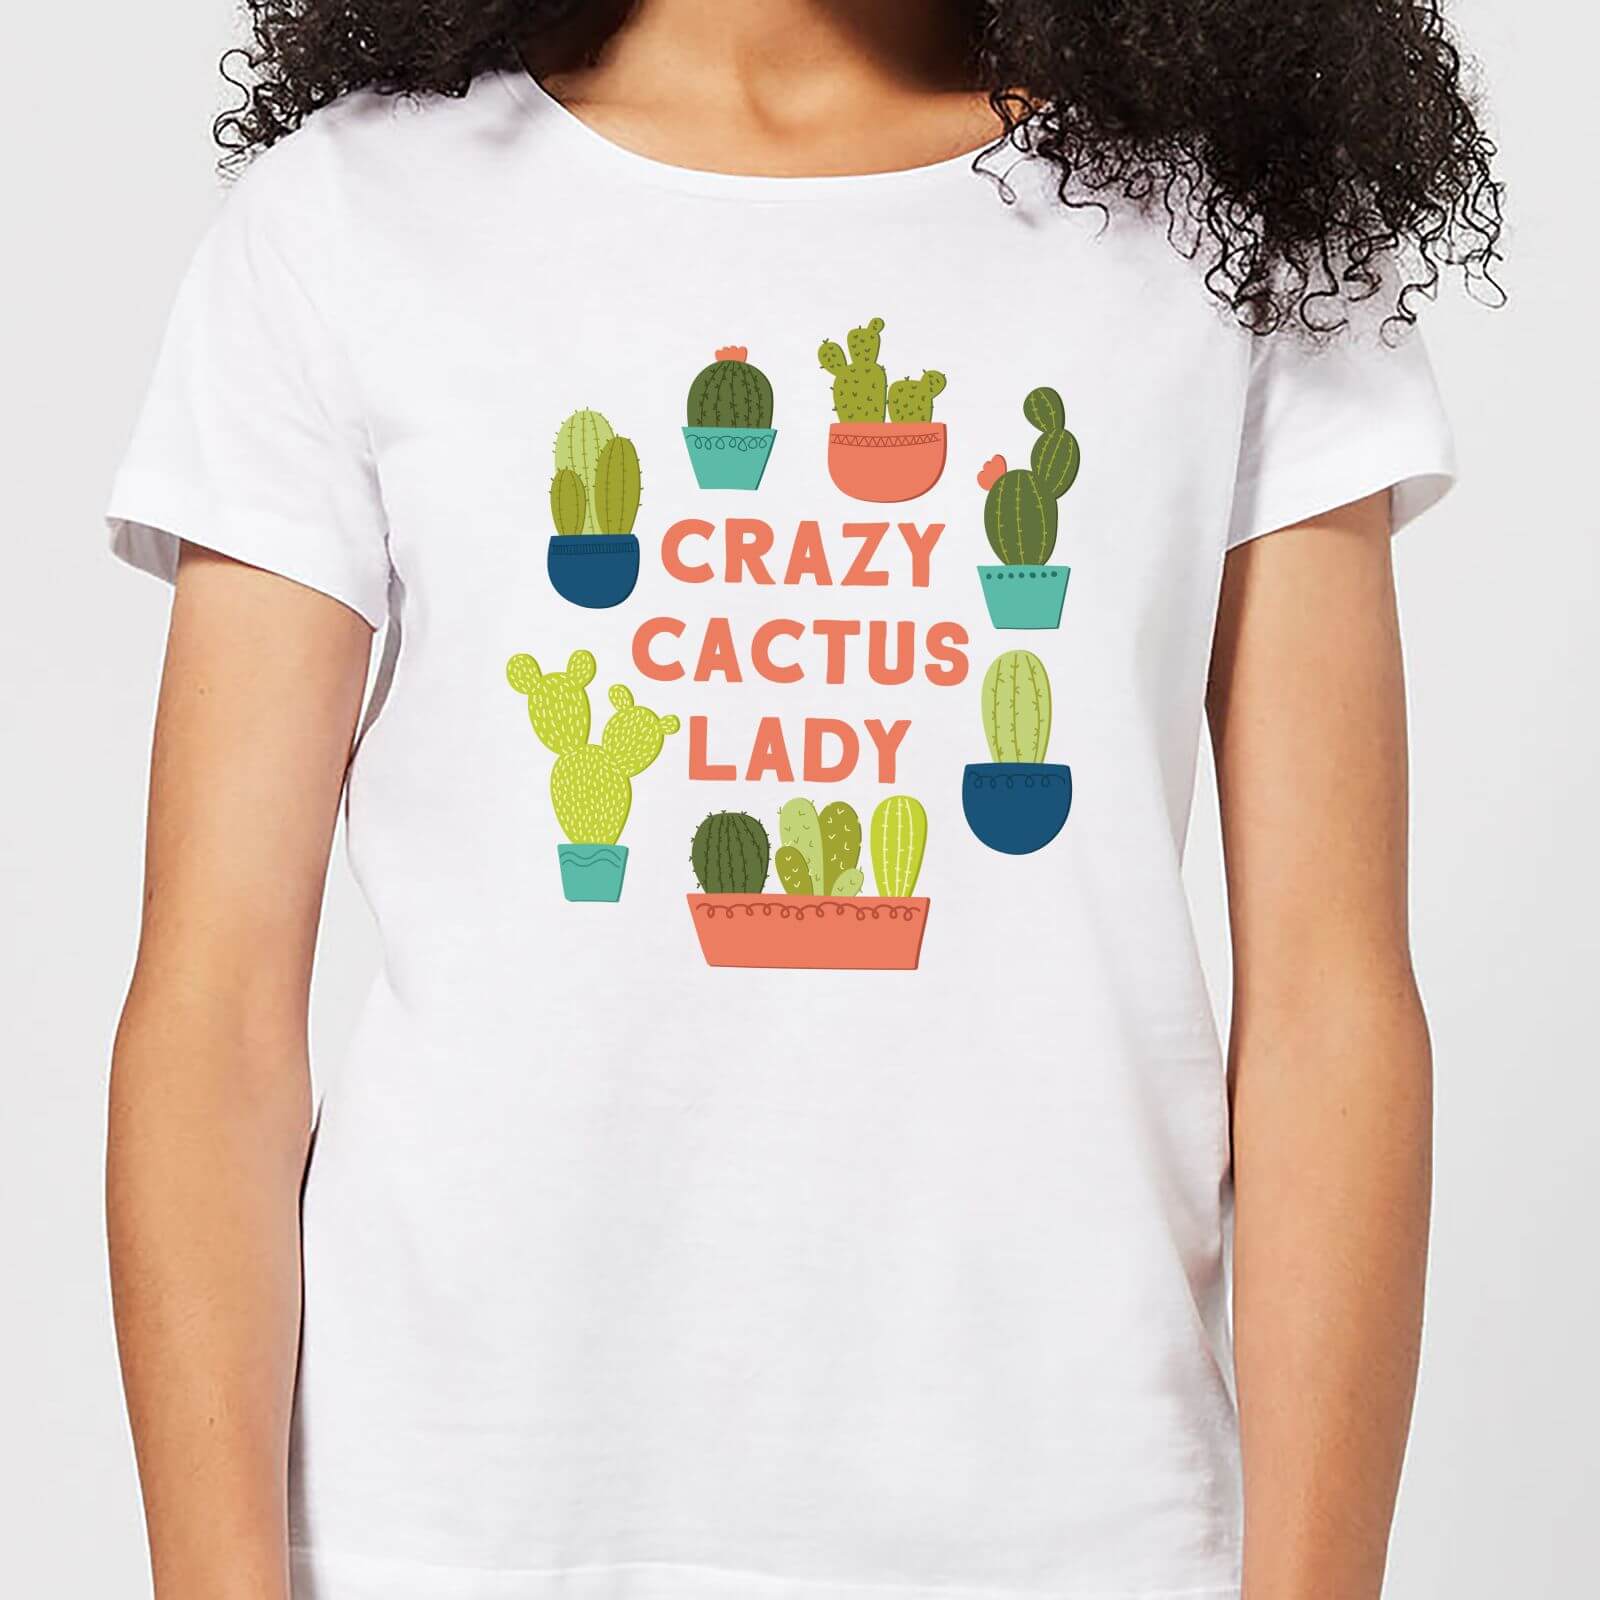 Crazy Cactus Lady Women's T-Shirt - White - S - White